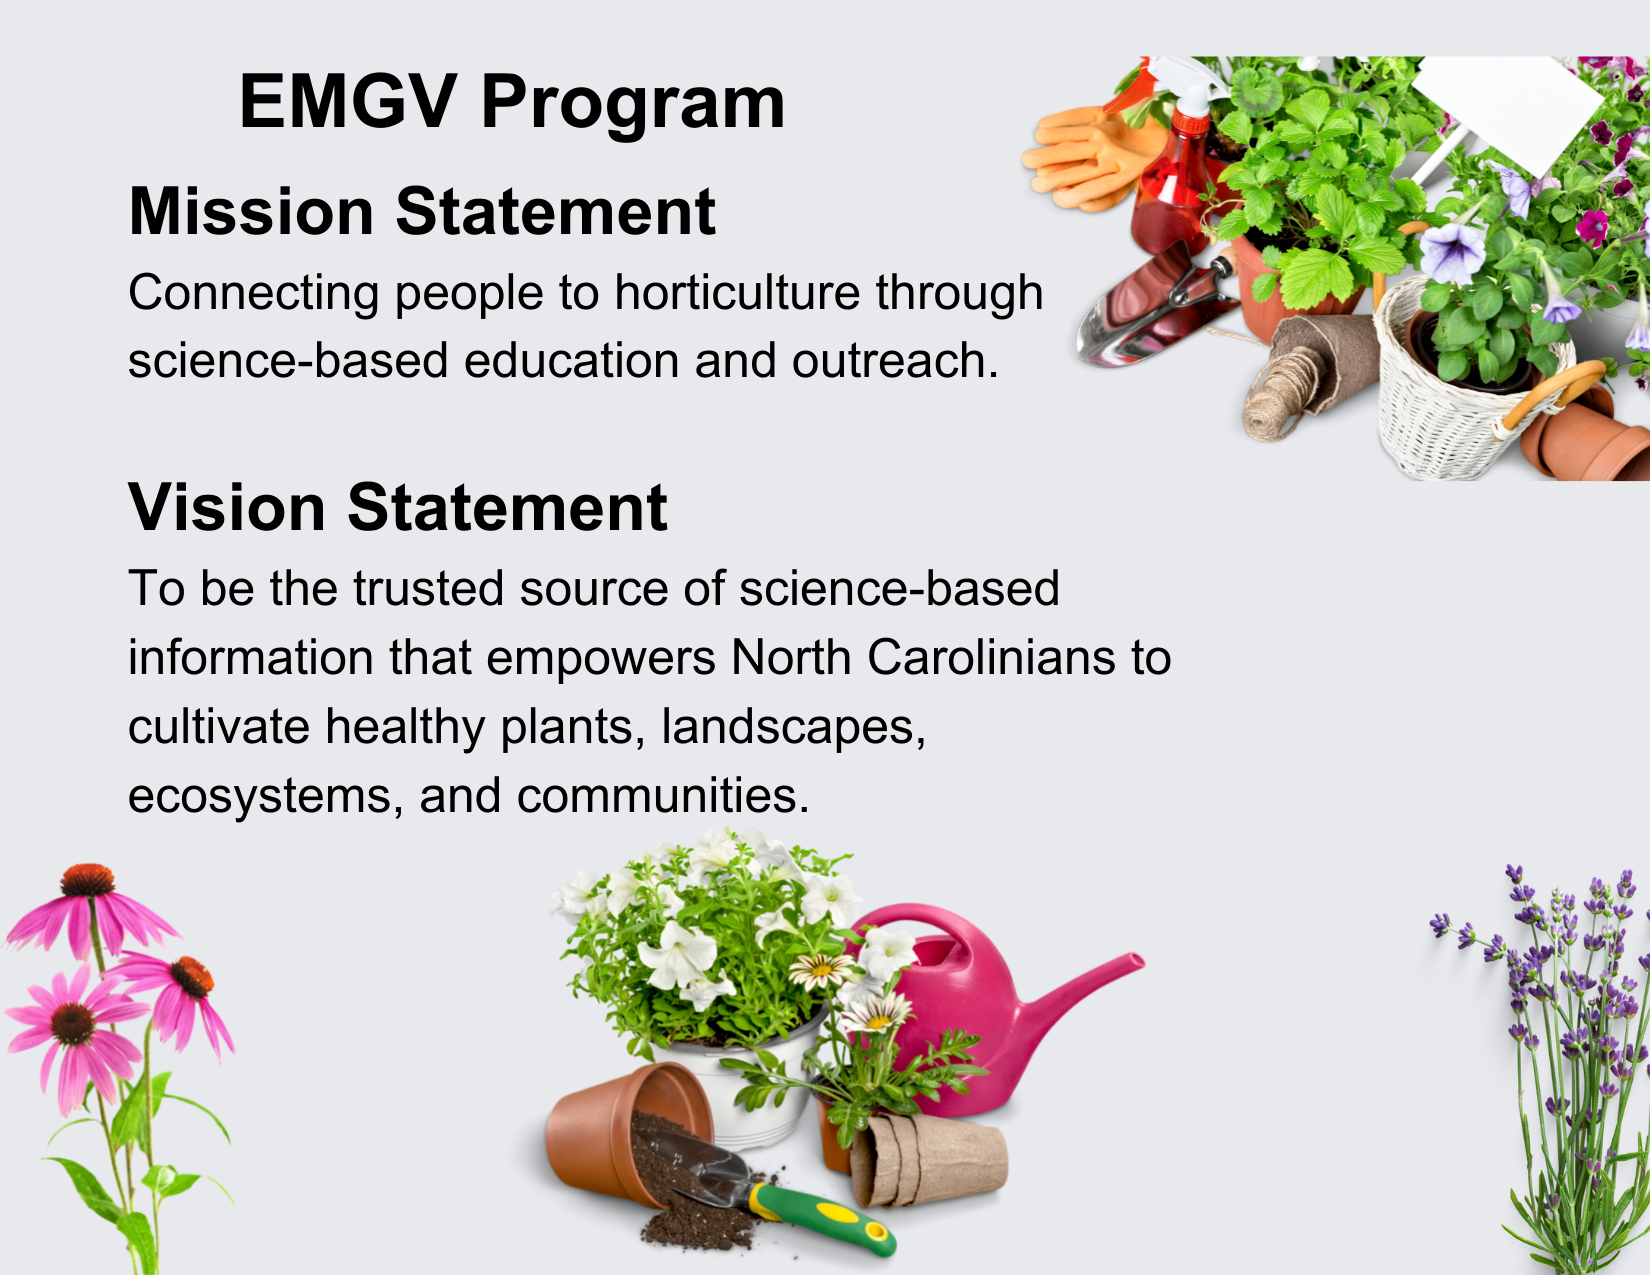 EMGV Program Mission Statement and Vision Statement 